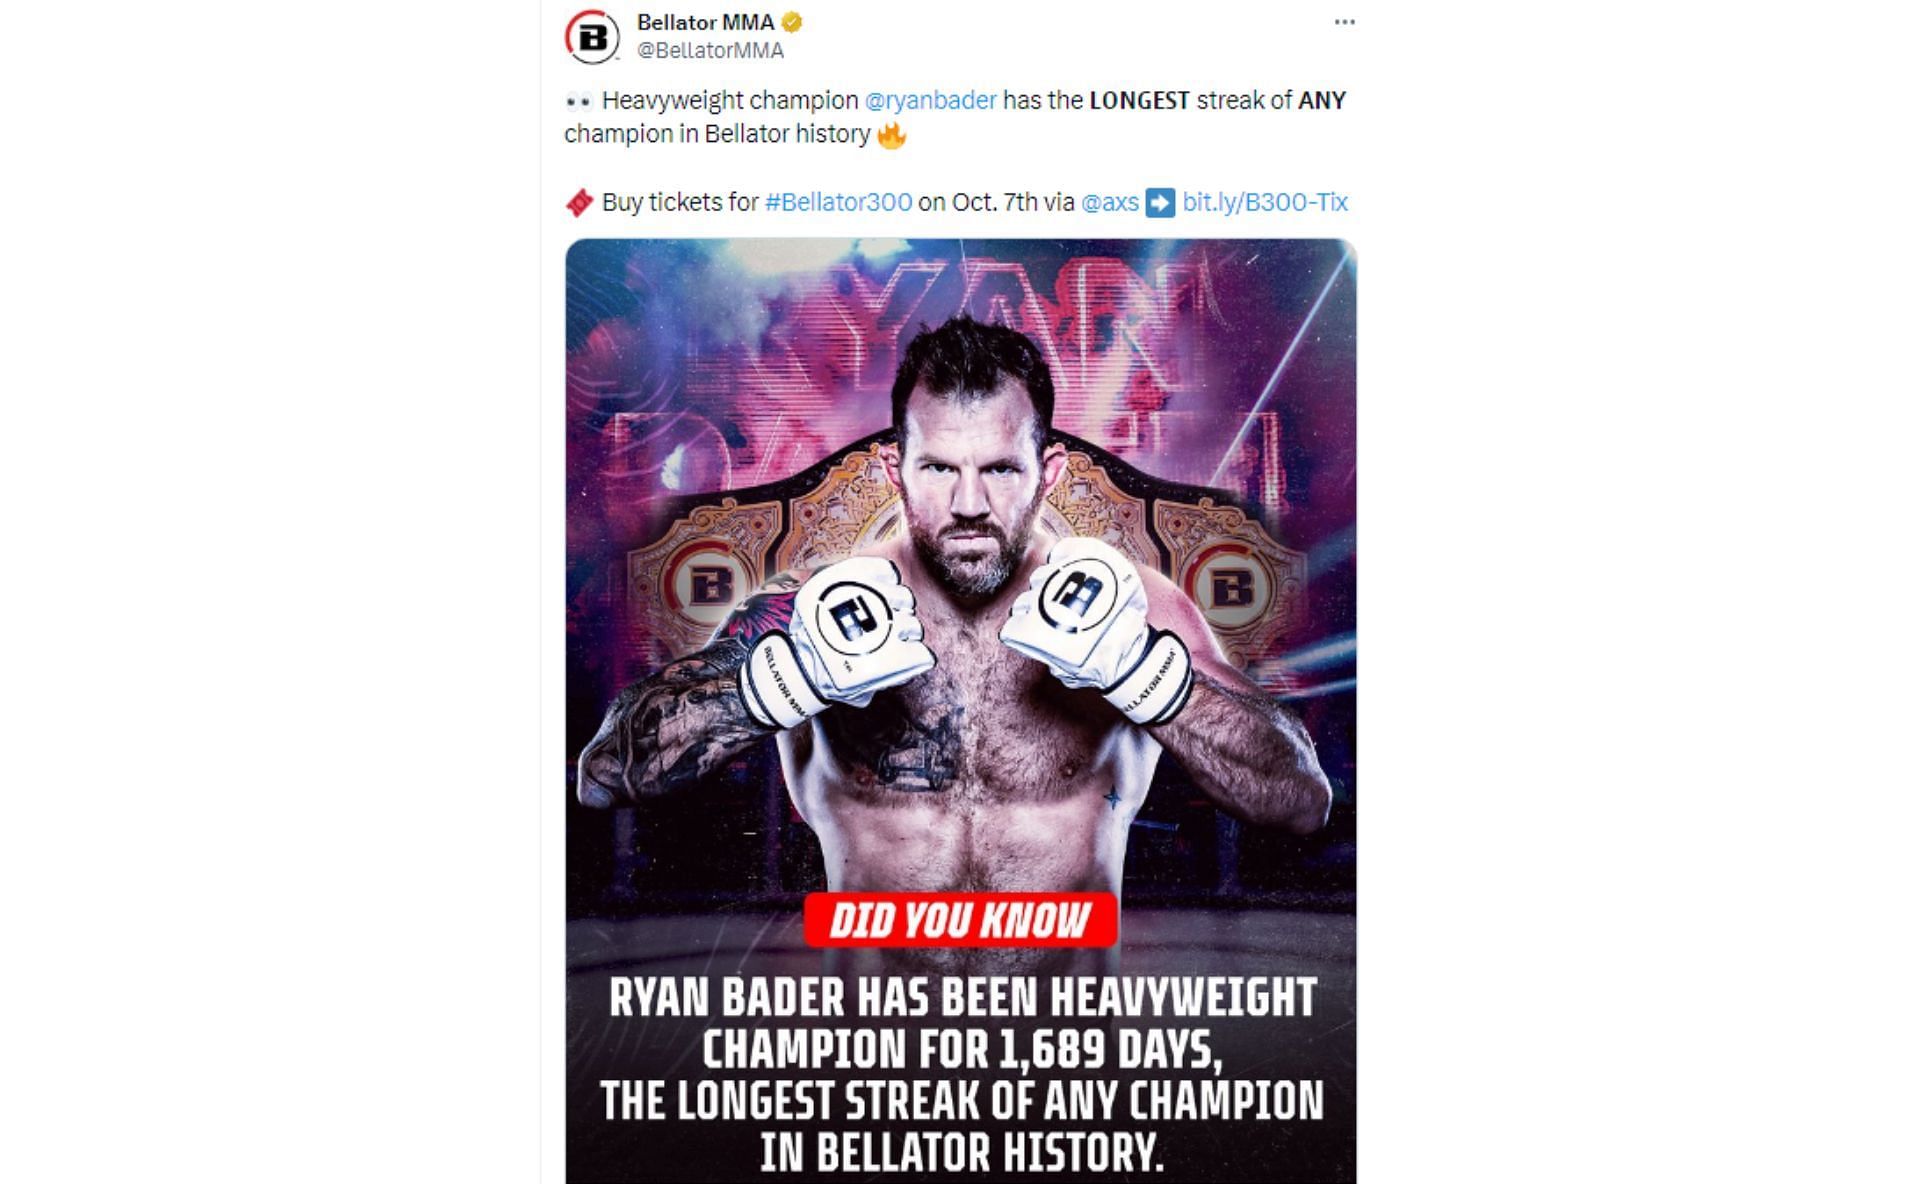 Tweet regarding Ryan Bader&#039;s heavyweight title reign